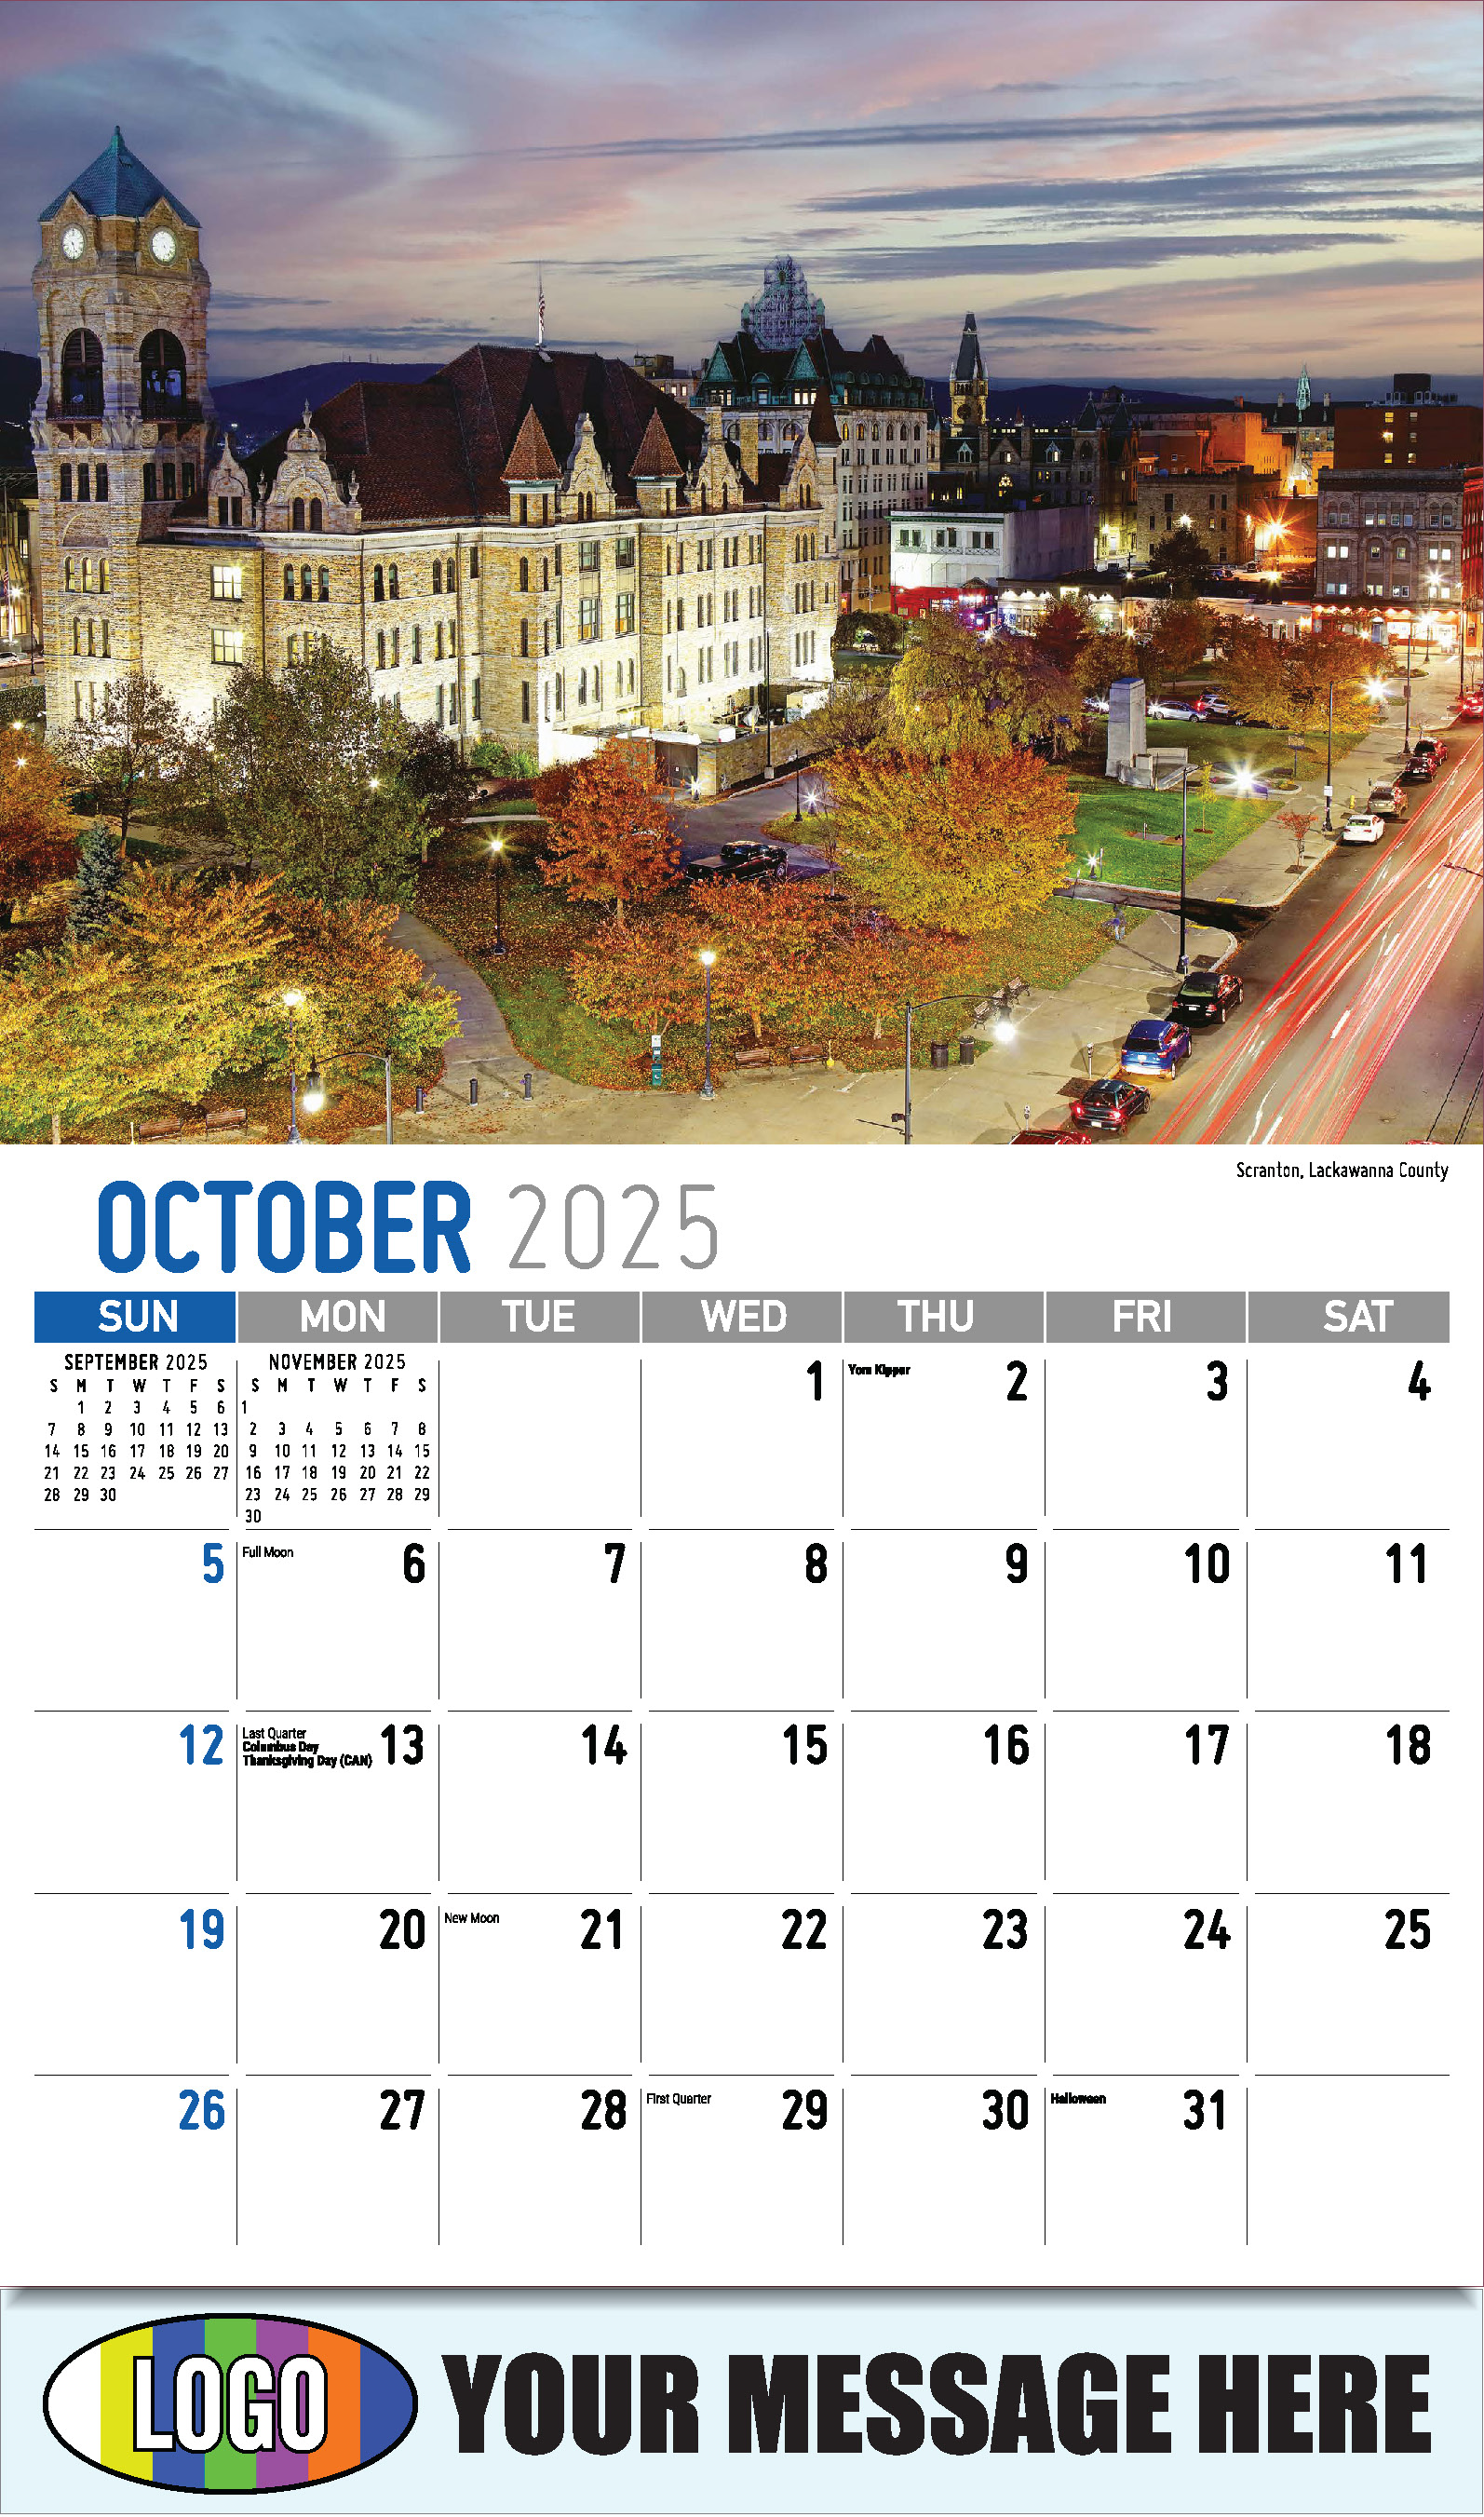 Scenes of Pennsylvania 2025 Business Promotion Calendar - October